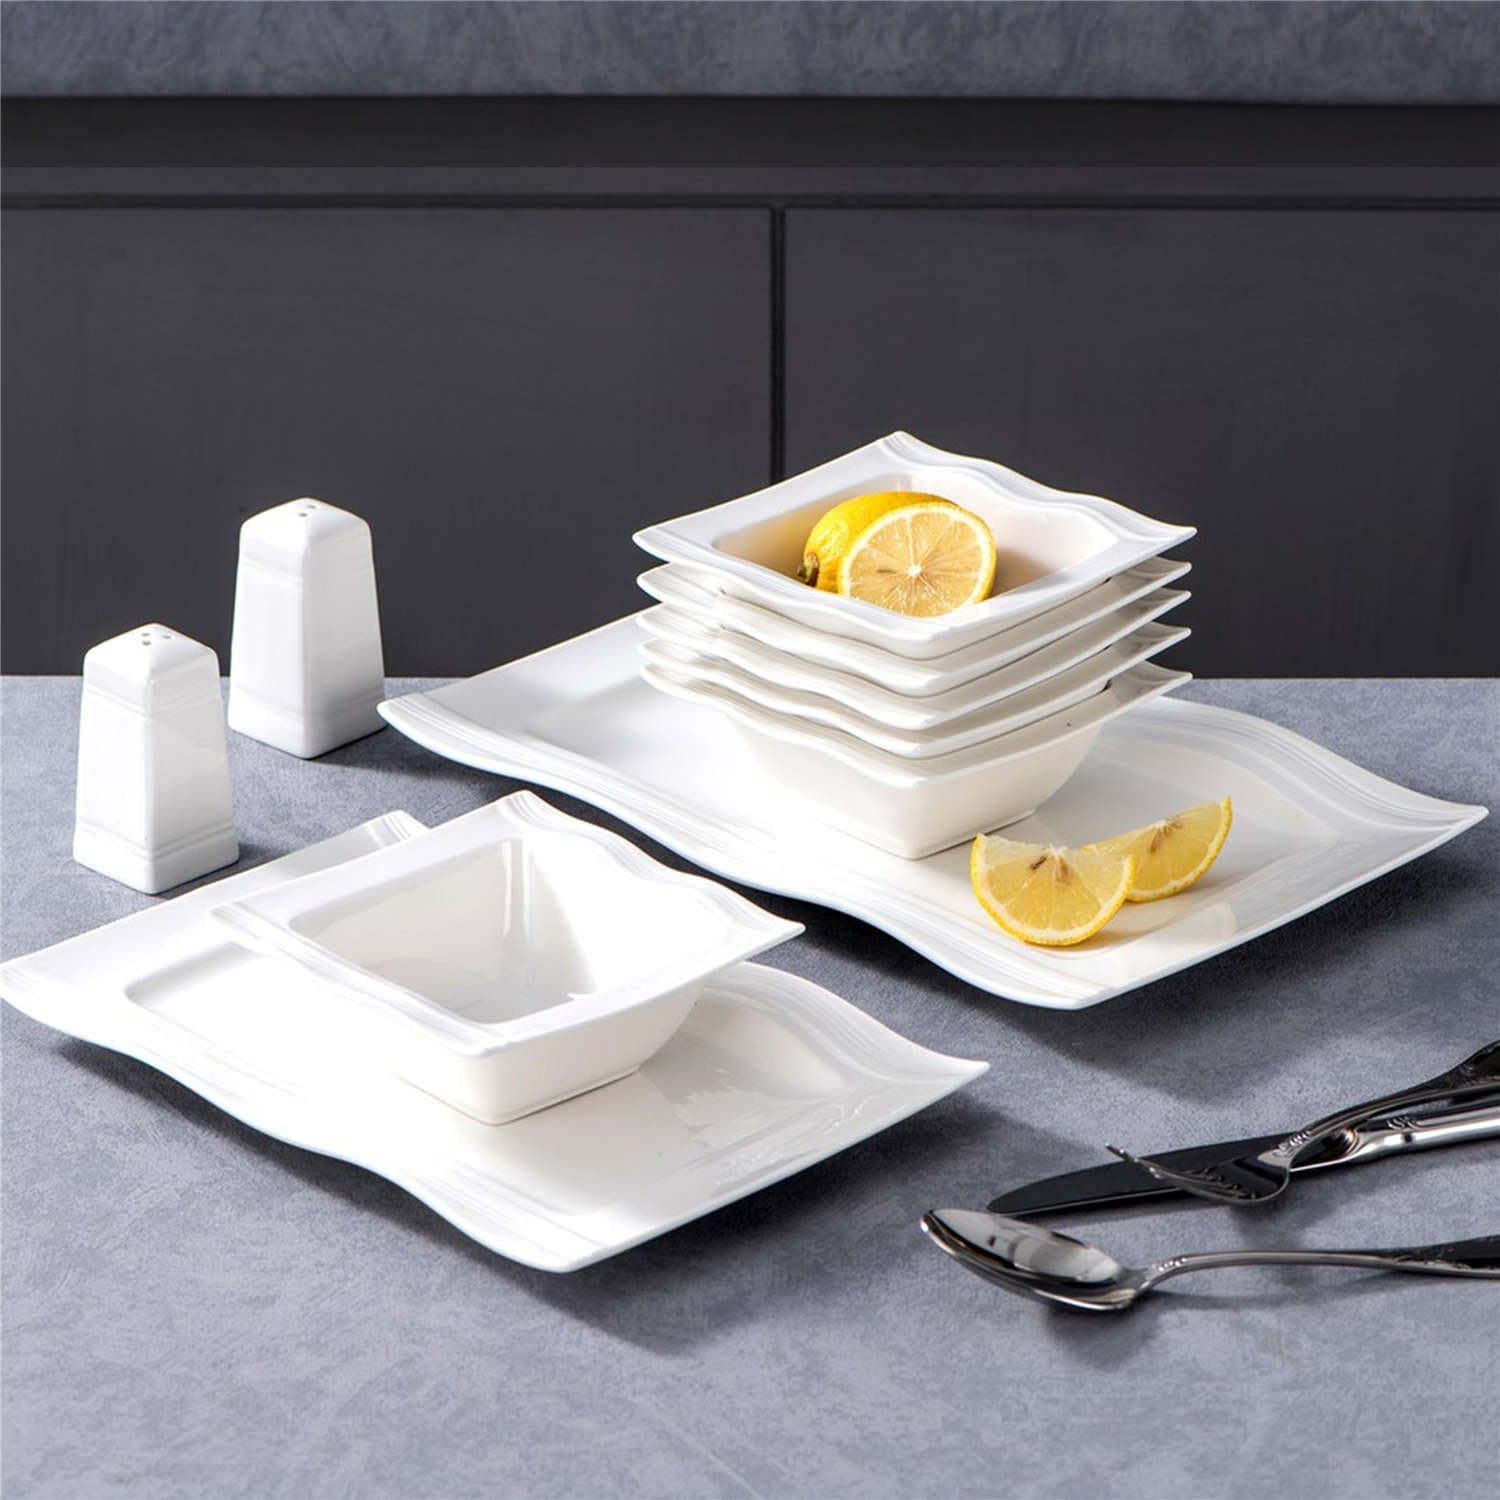 MALACASA Julia Porcelain China Dinnerware Set - Service for 6